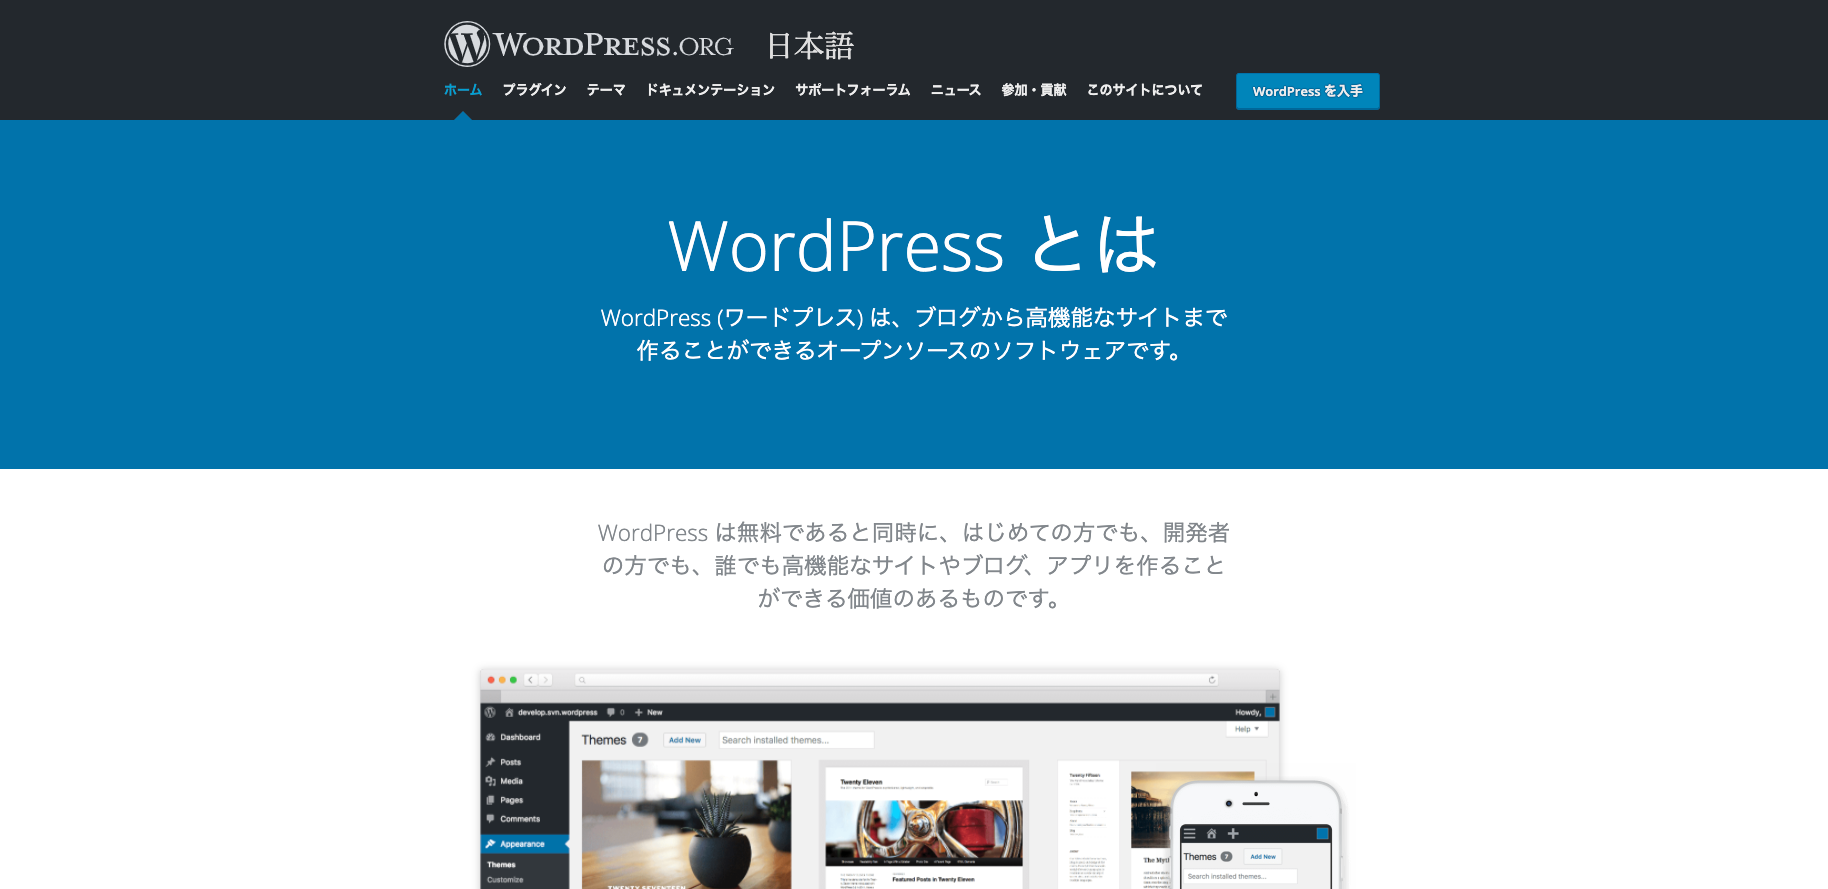 ja.wordpress.org